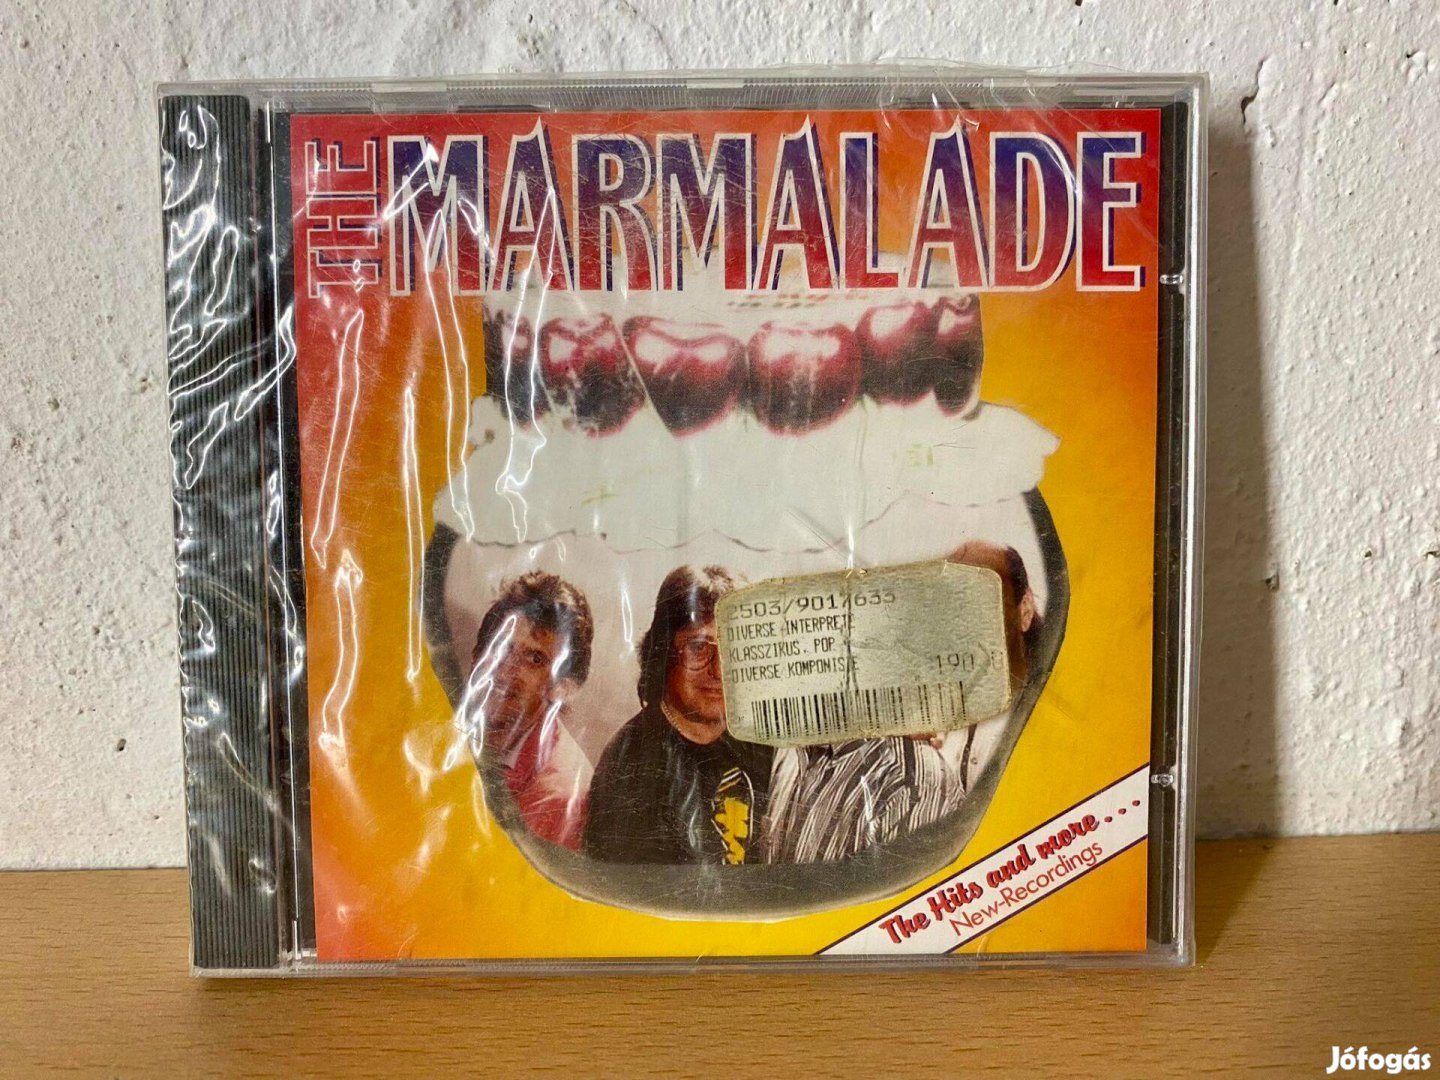 The Marmalade - The Hits and more. CD lemez (Bontatlan állapot!)